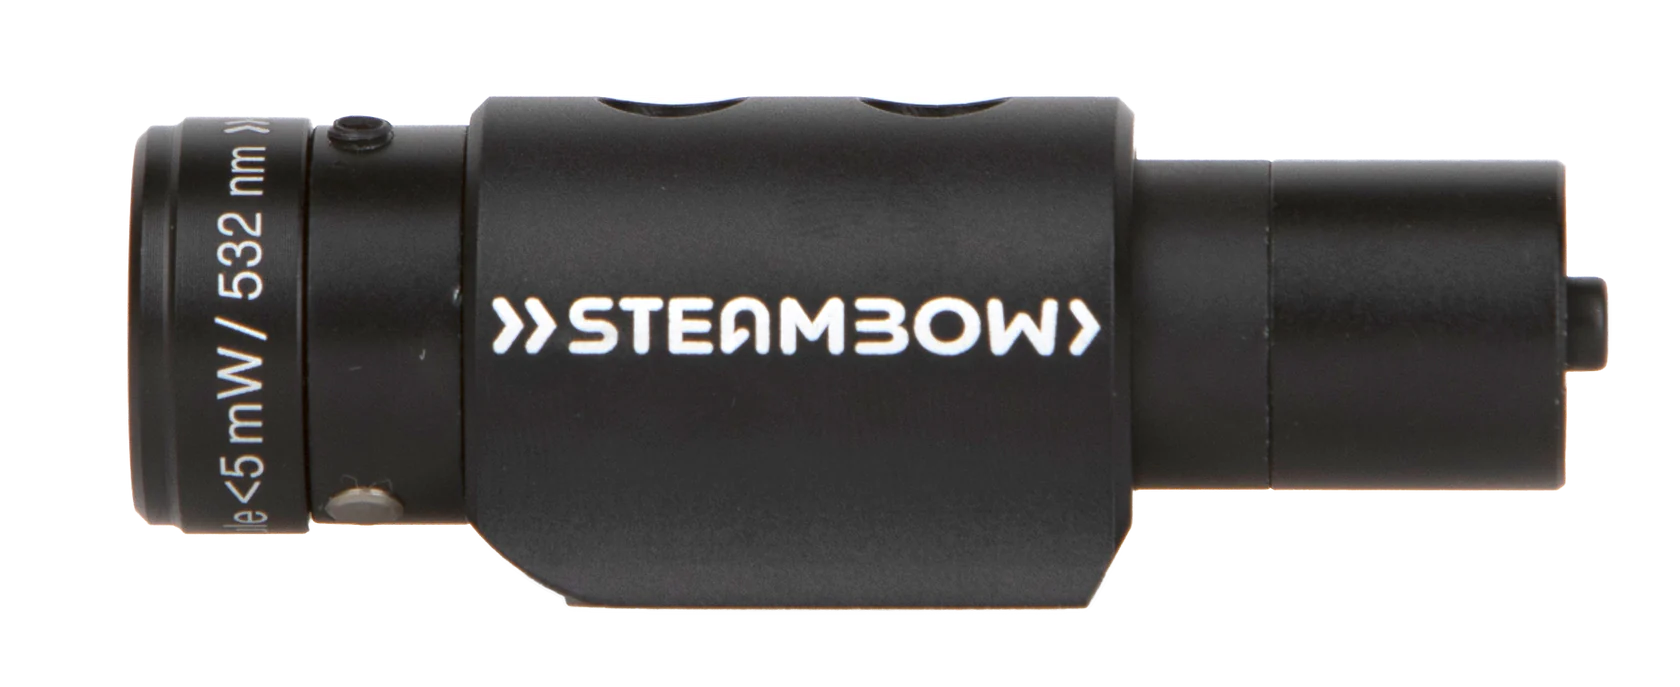 Steambow Archery AR-Series Laser Sight